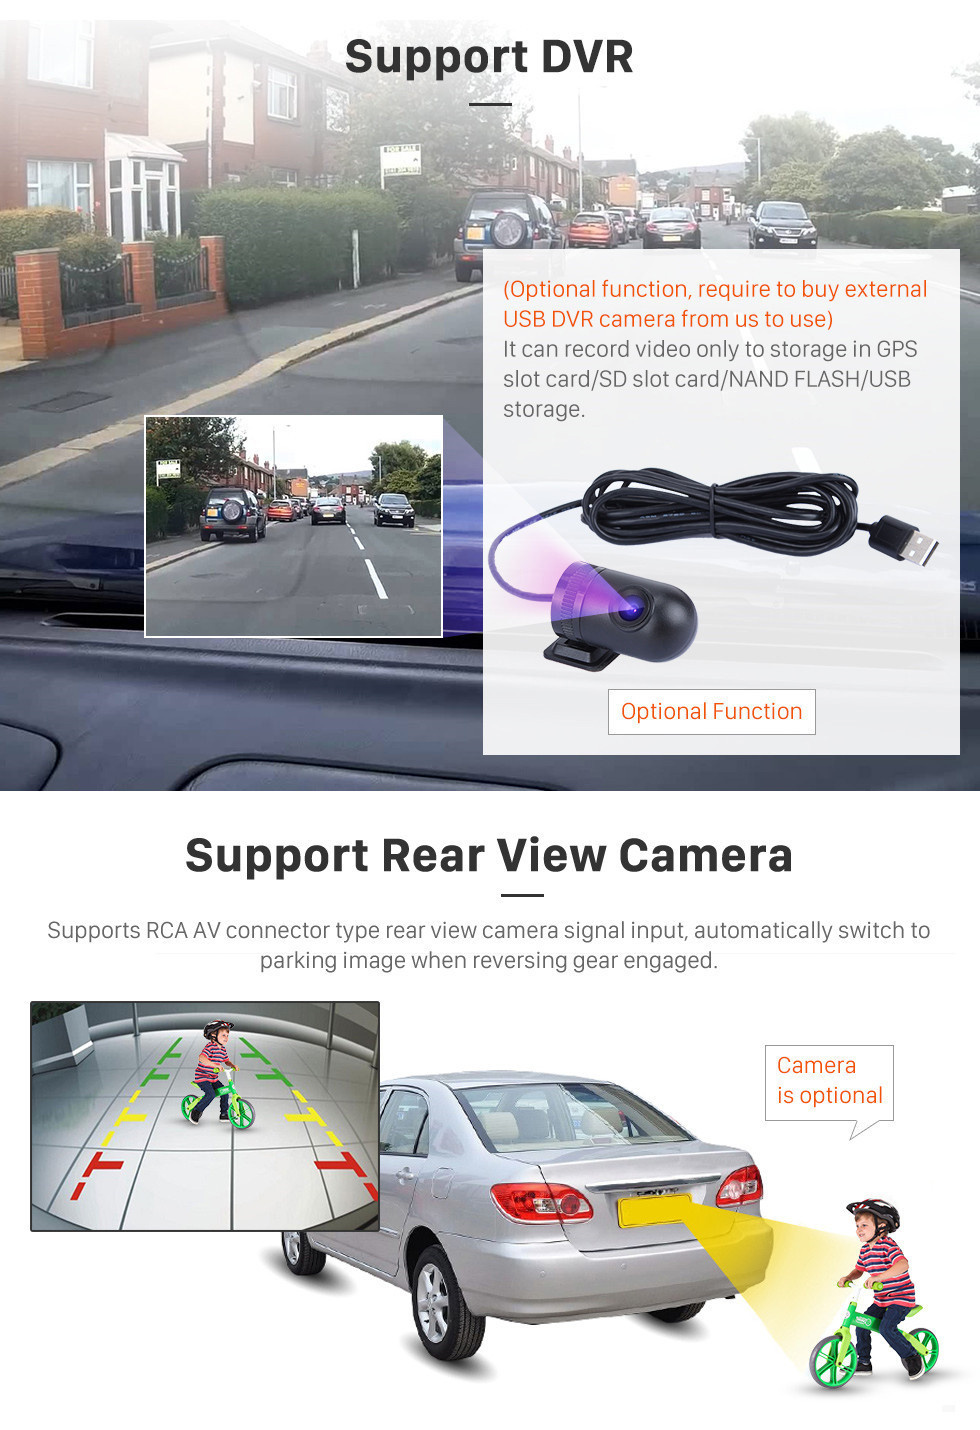 Seicane OEM 9 inch Android 11.0 Radio for 2015 Mahindra Scorpio Manual A/C Bluetooth Wifi HD Touchscreen GPS Navigation Carplay support DAB+ Rear camera